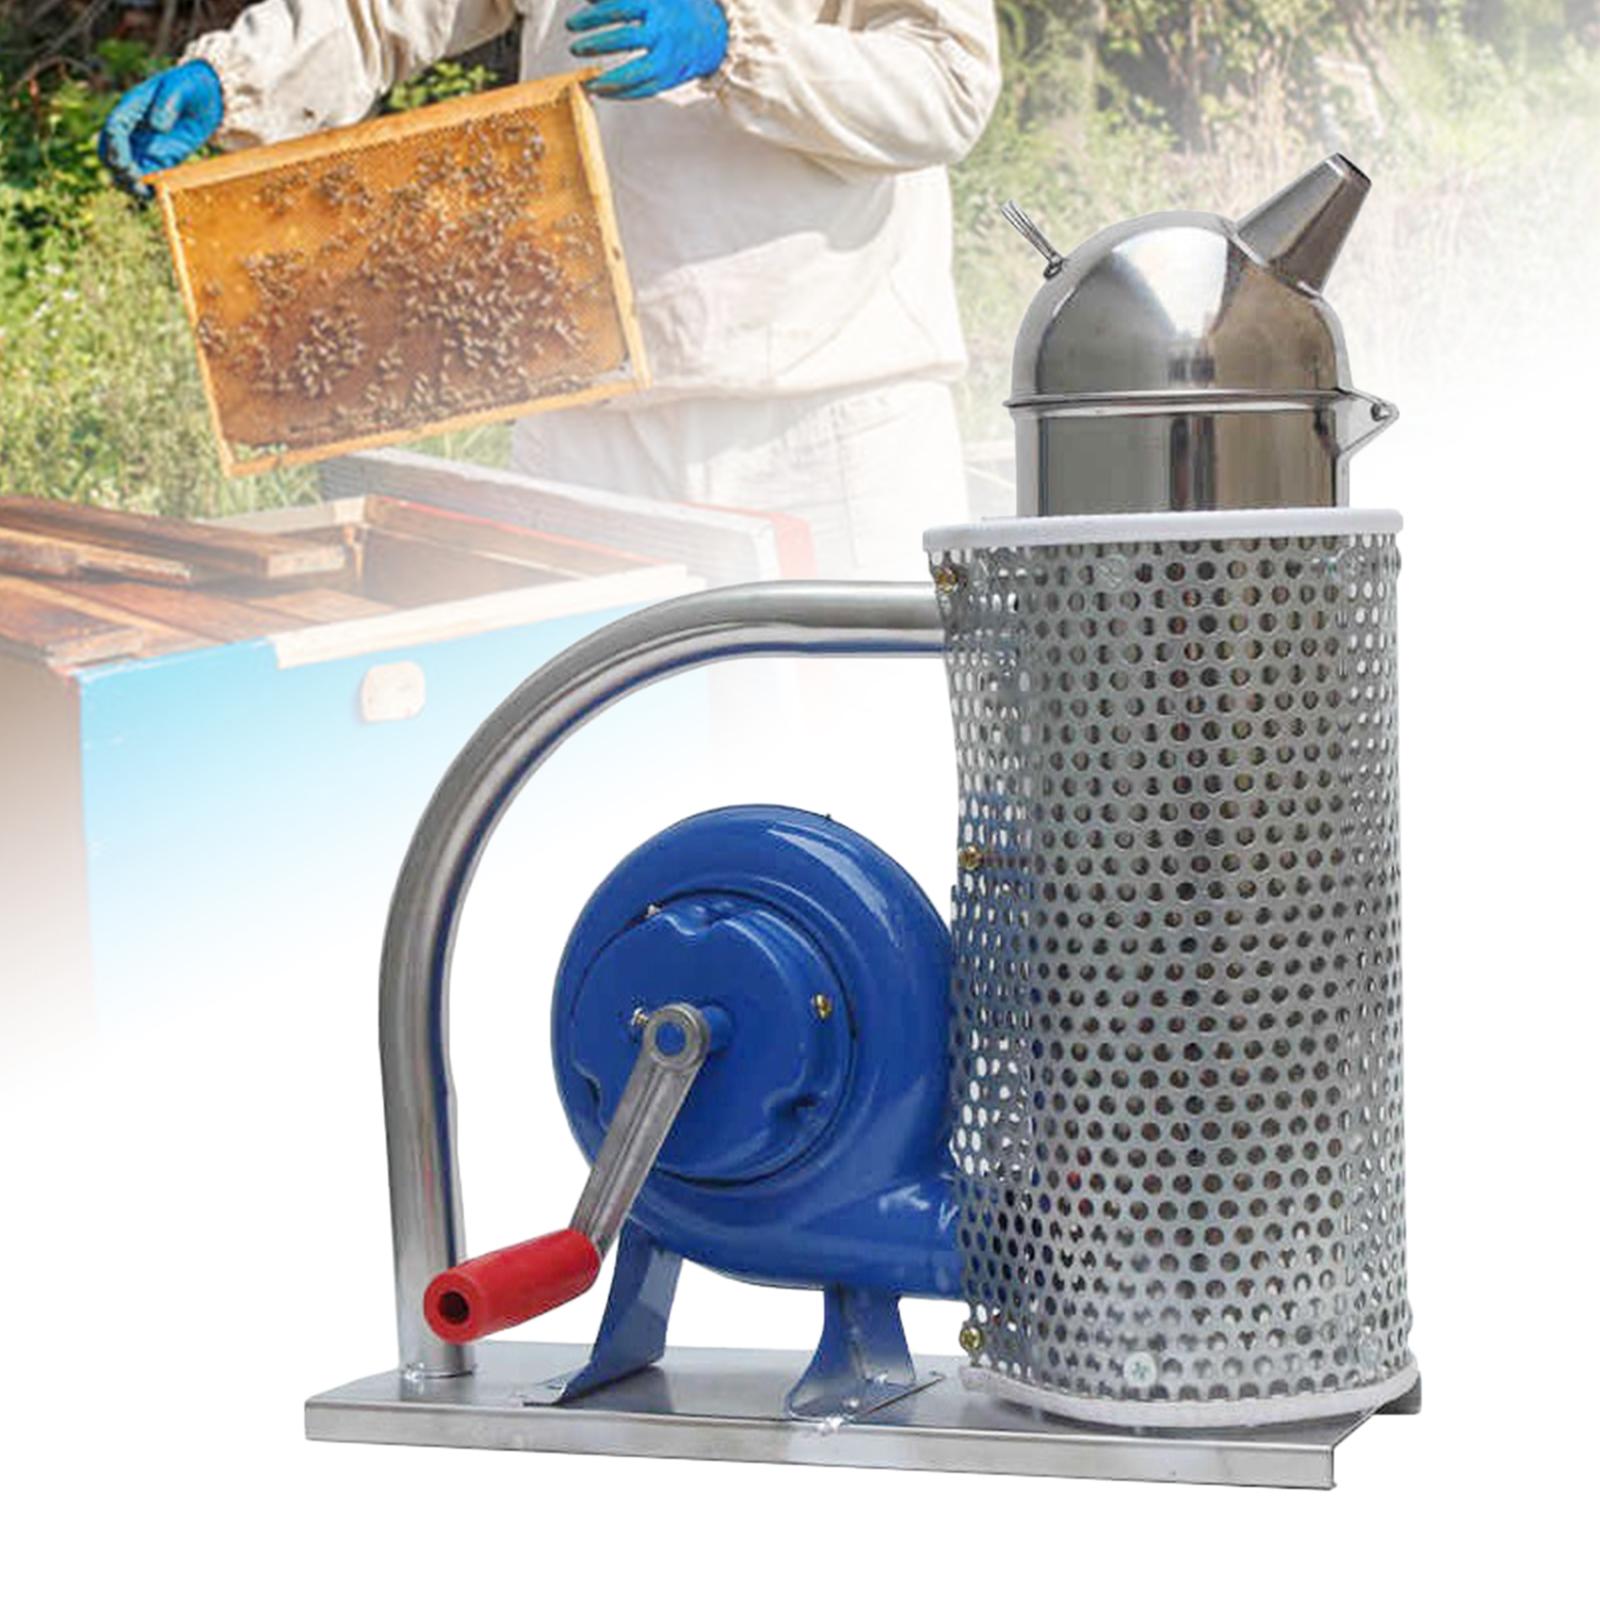 Bee Hive Smoker Blacksmith Beekeeping Equipment Tool Stainless Steel